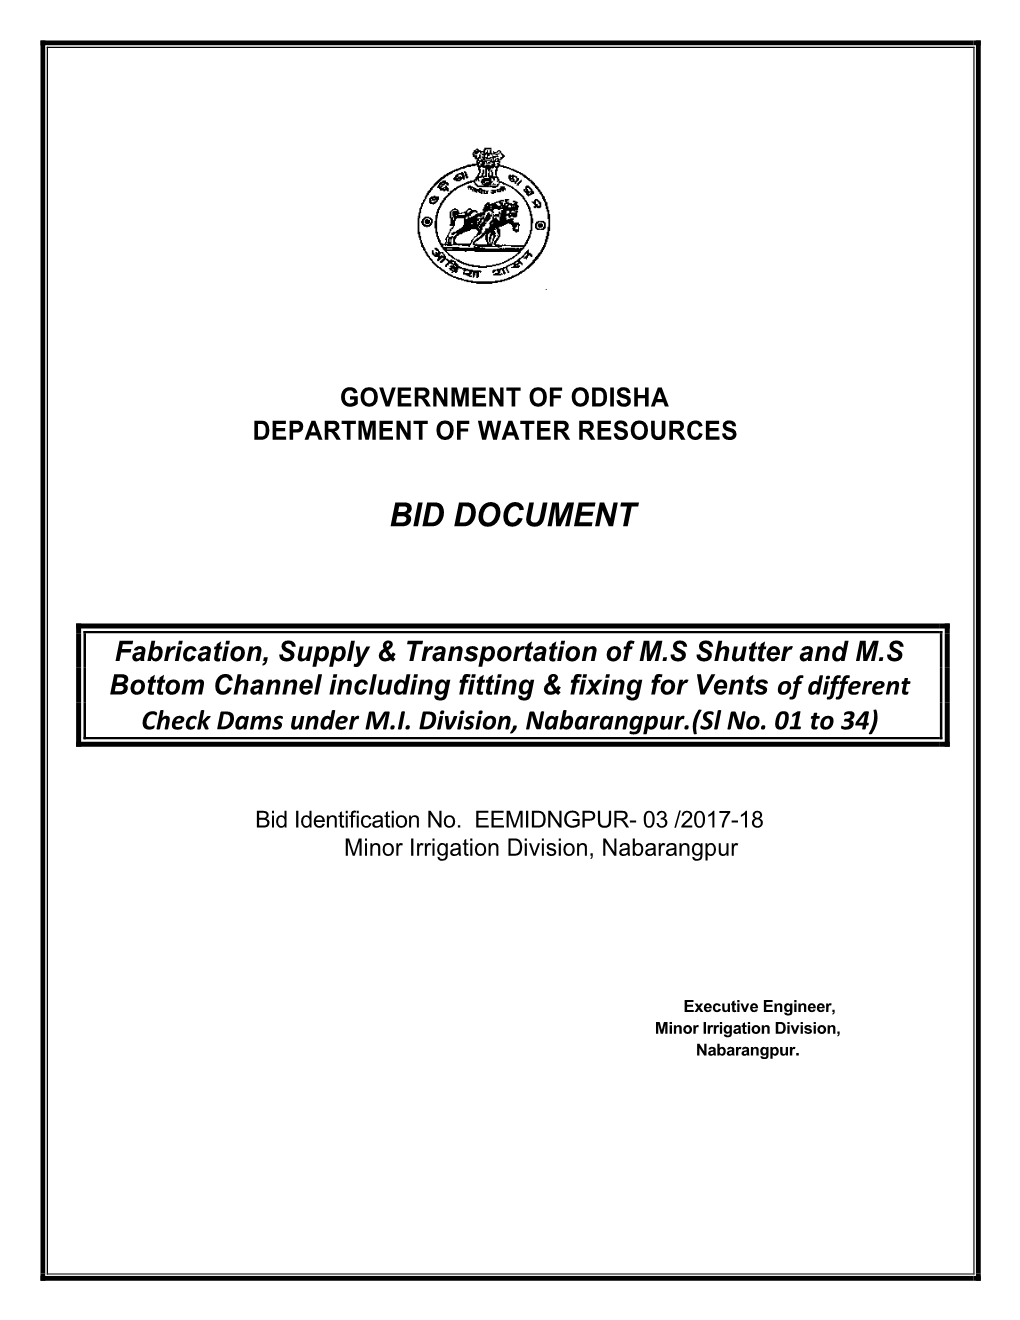 Bid Document